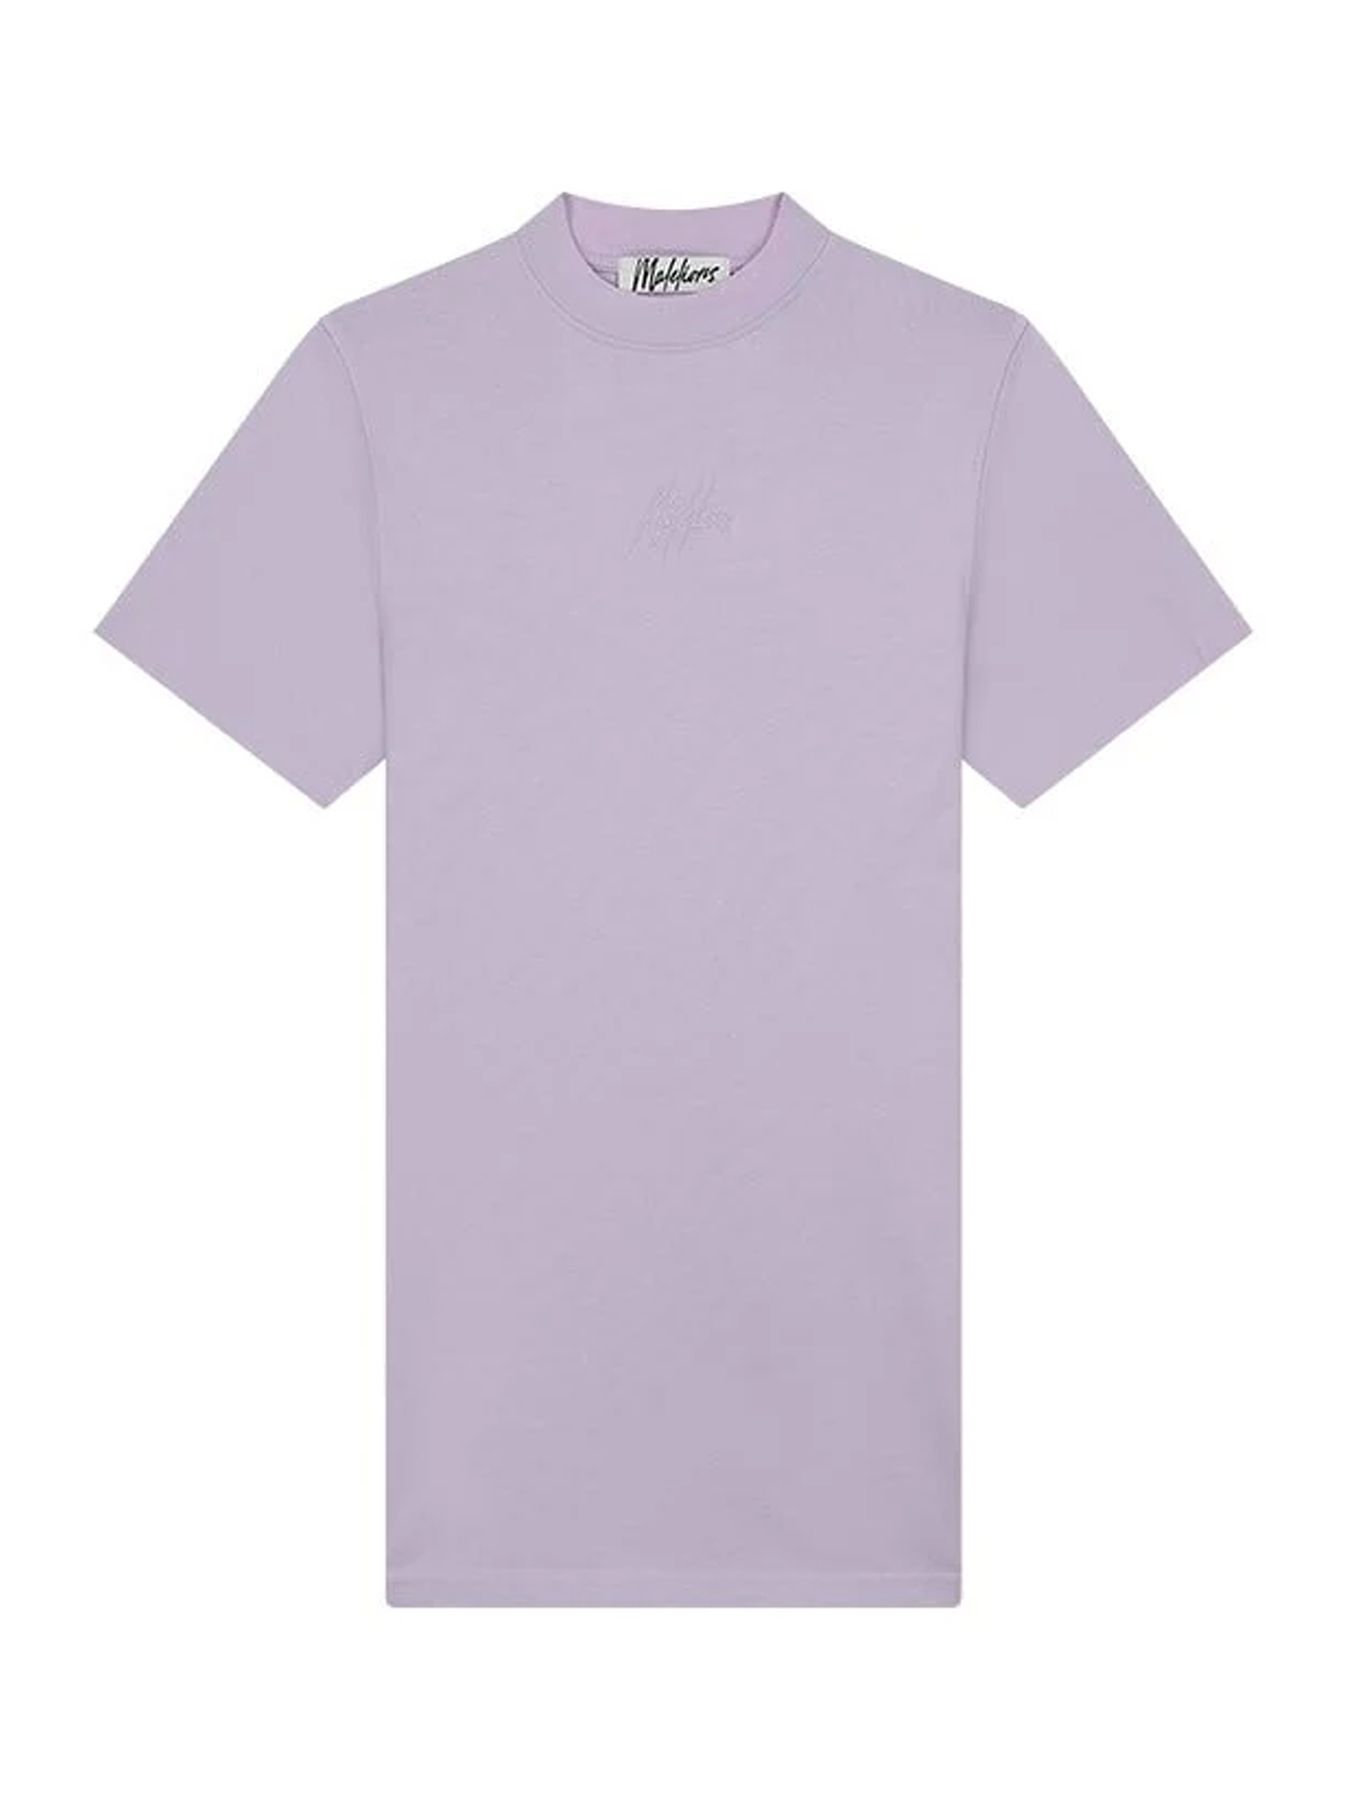 Malelions Women Firma t-shirt dress Lilac 00108673-506